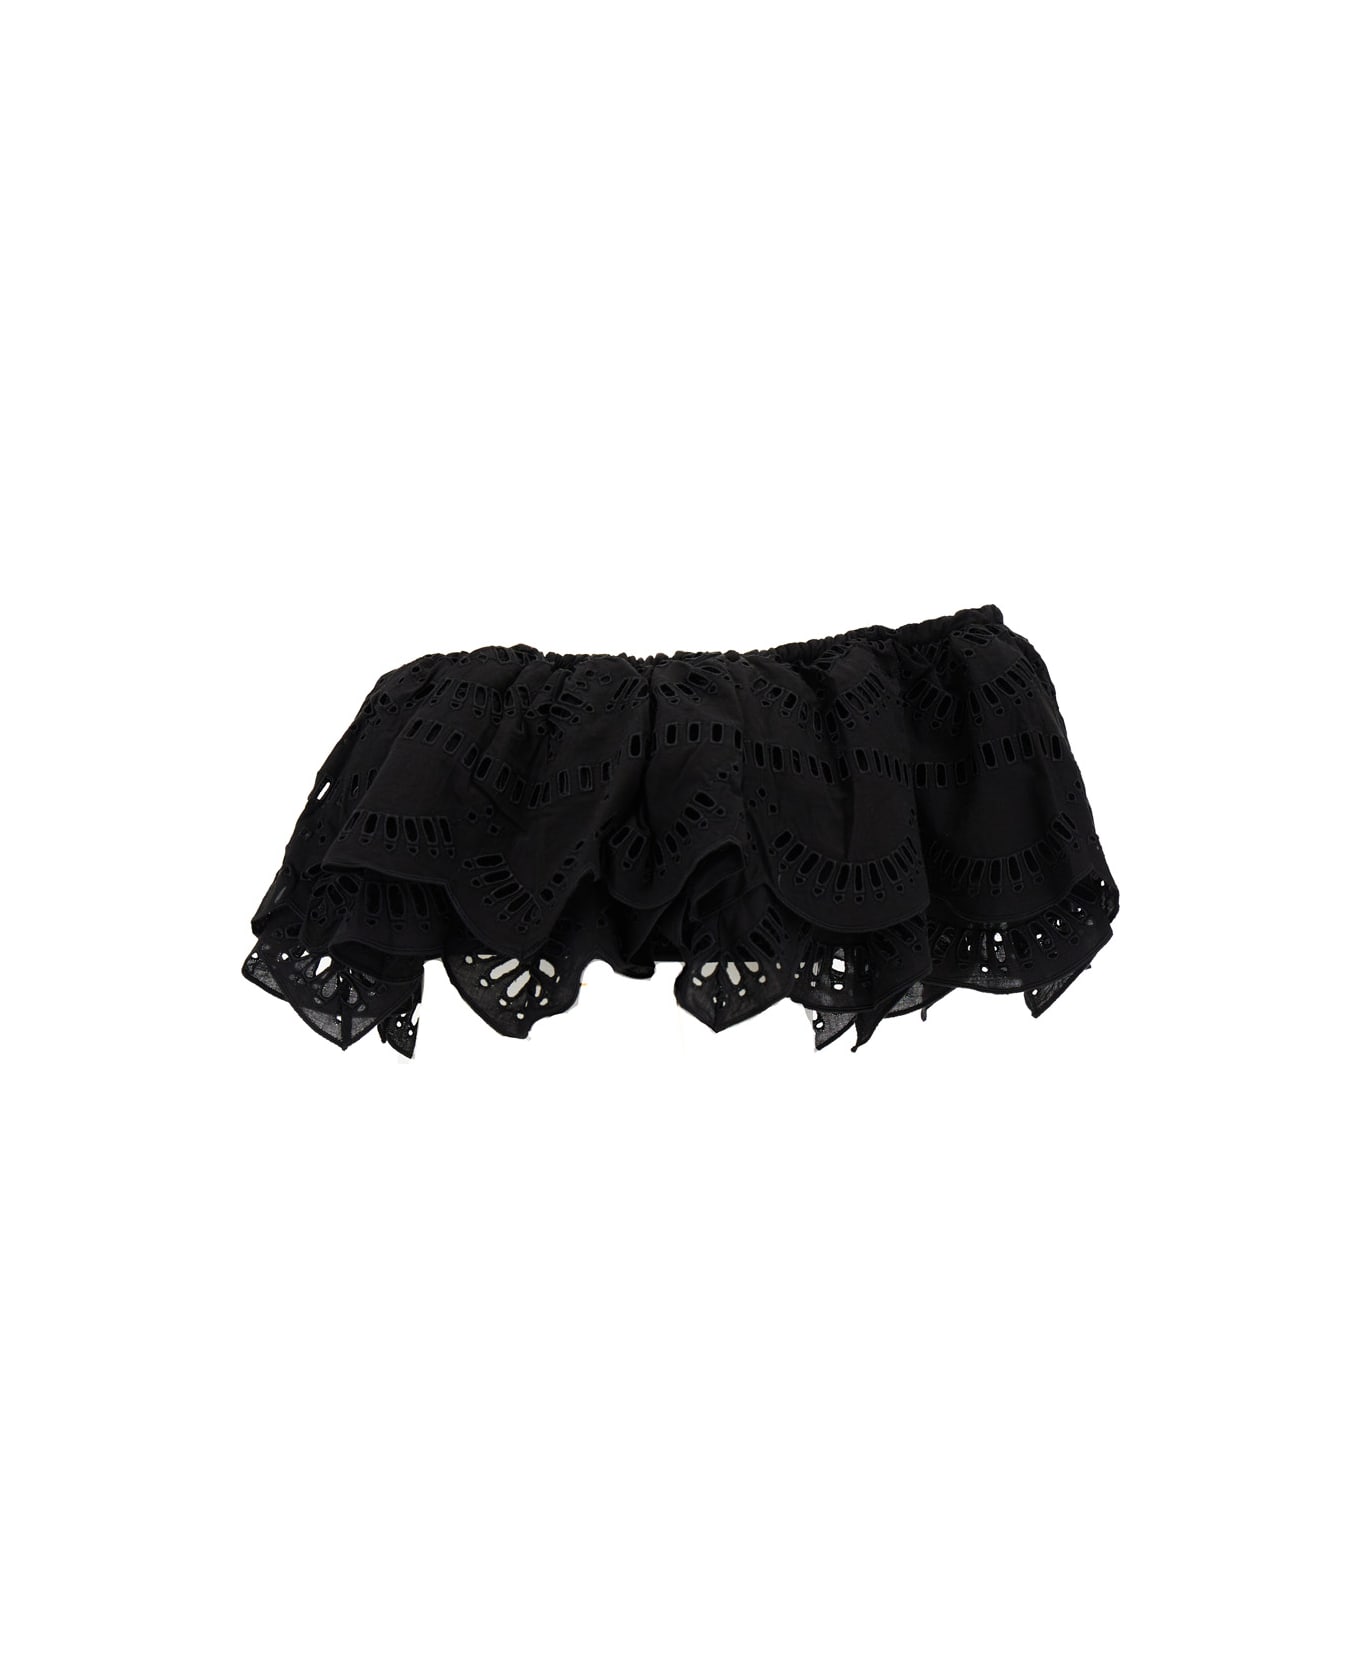 Charo Ruiz 'collyk' Black Off-the-shoulders Top In Cotton Lace Woman - Black